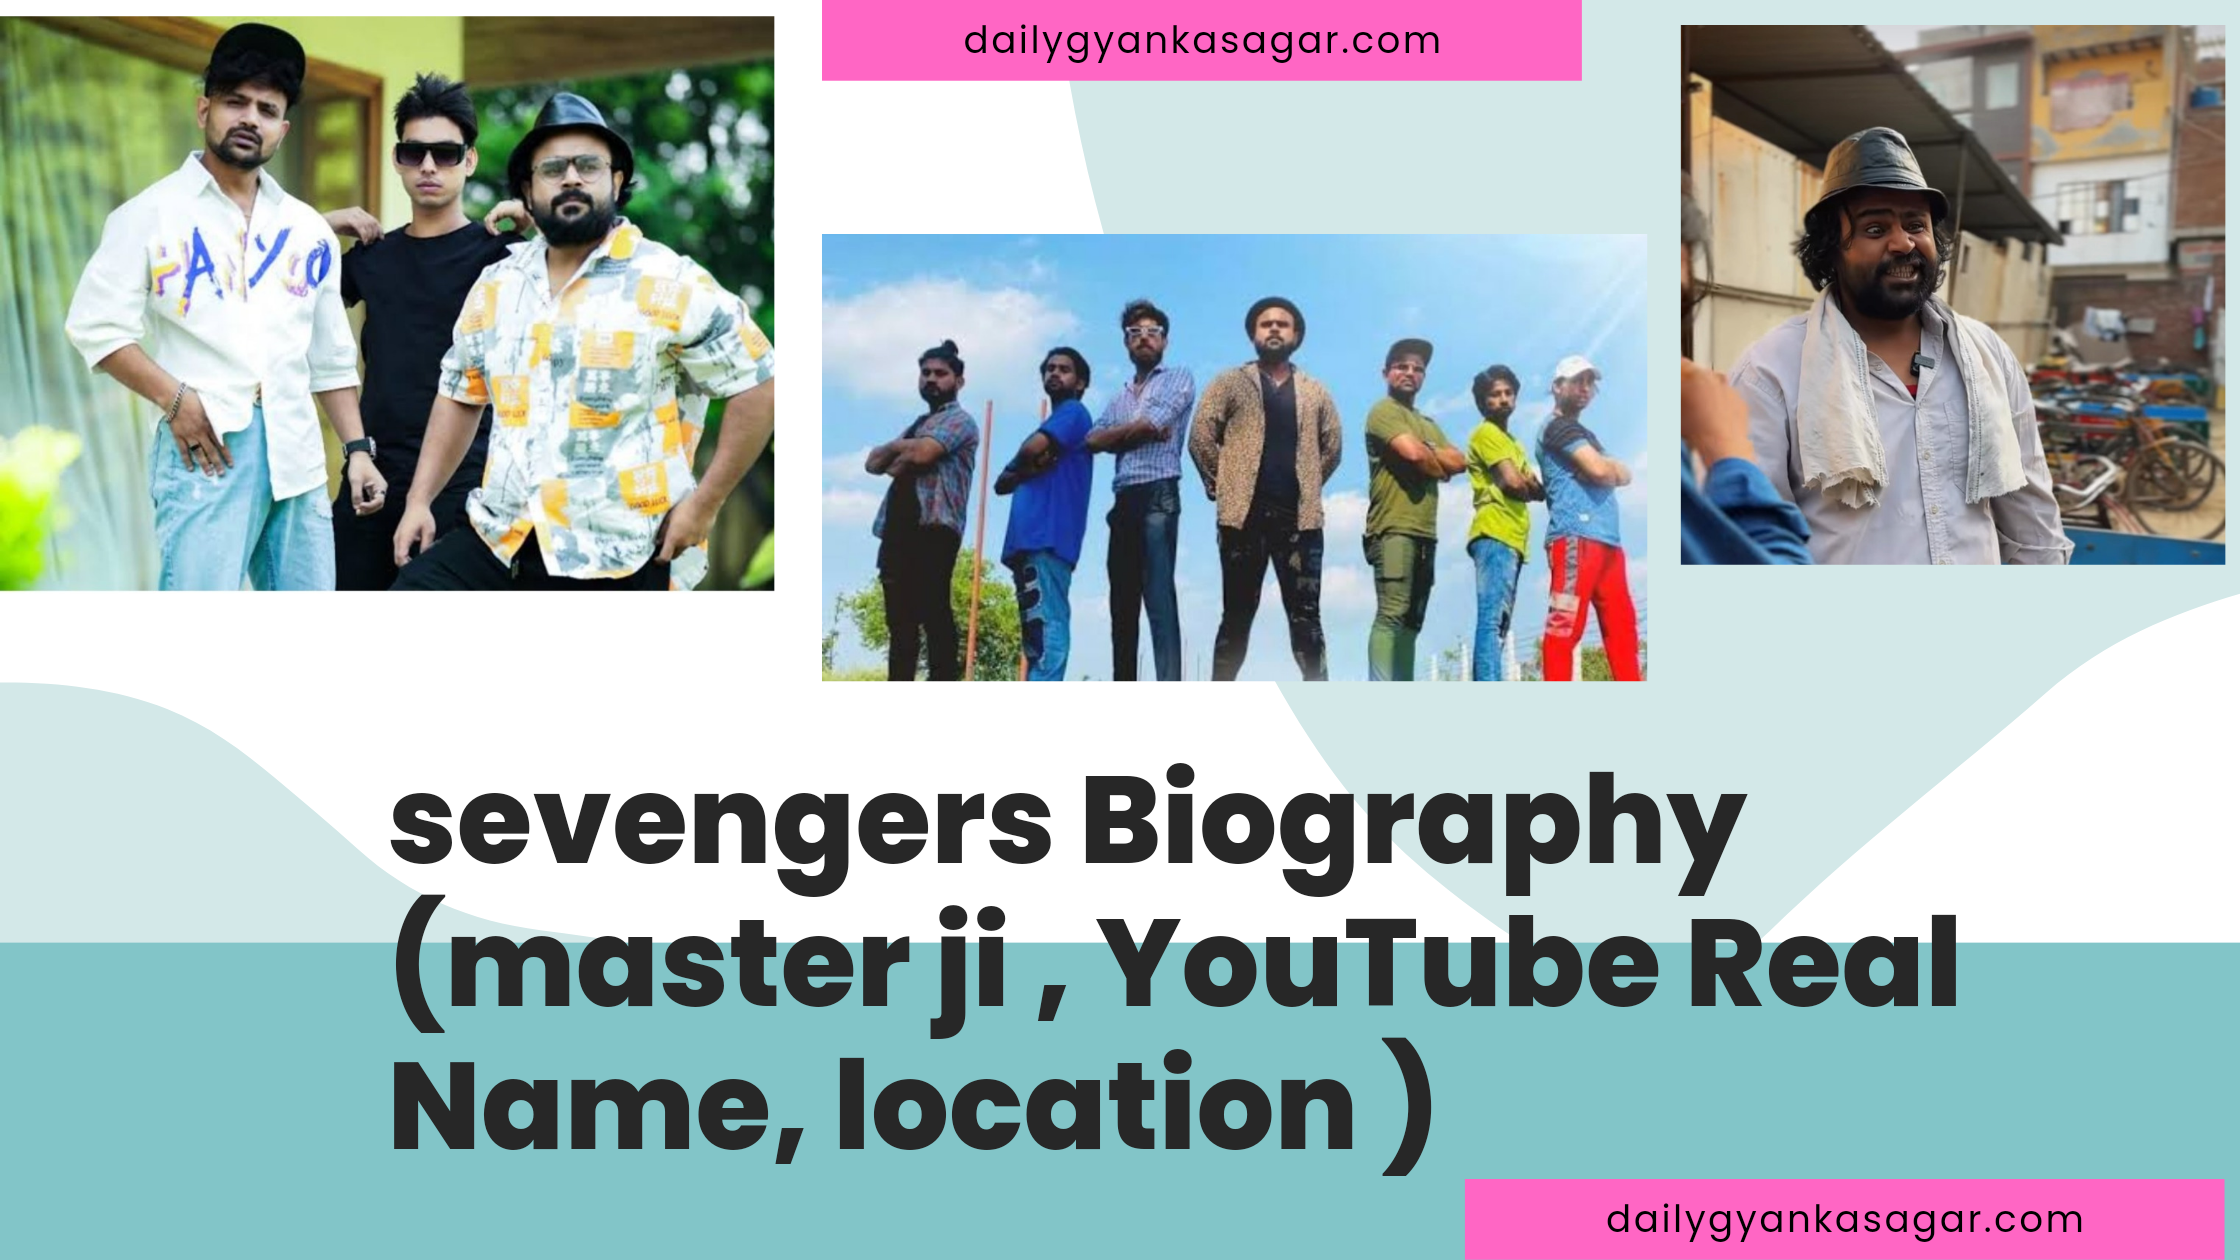 Sevengers Biography (master ji, YouTube Real Name, location)